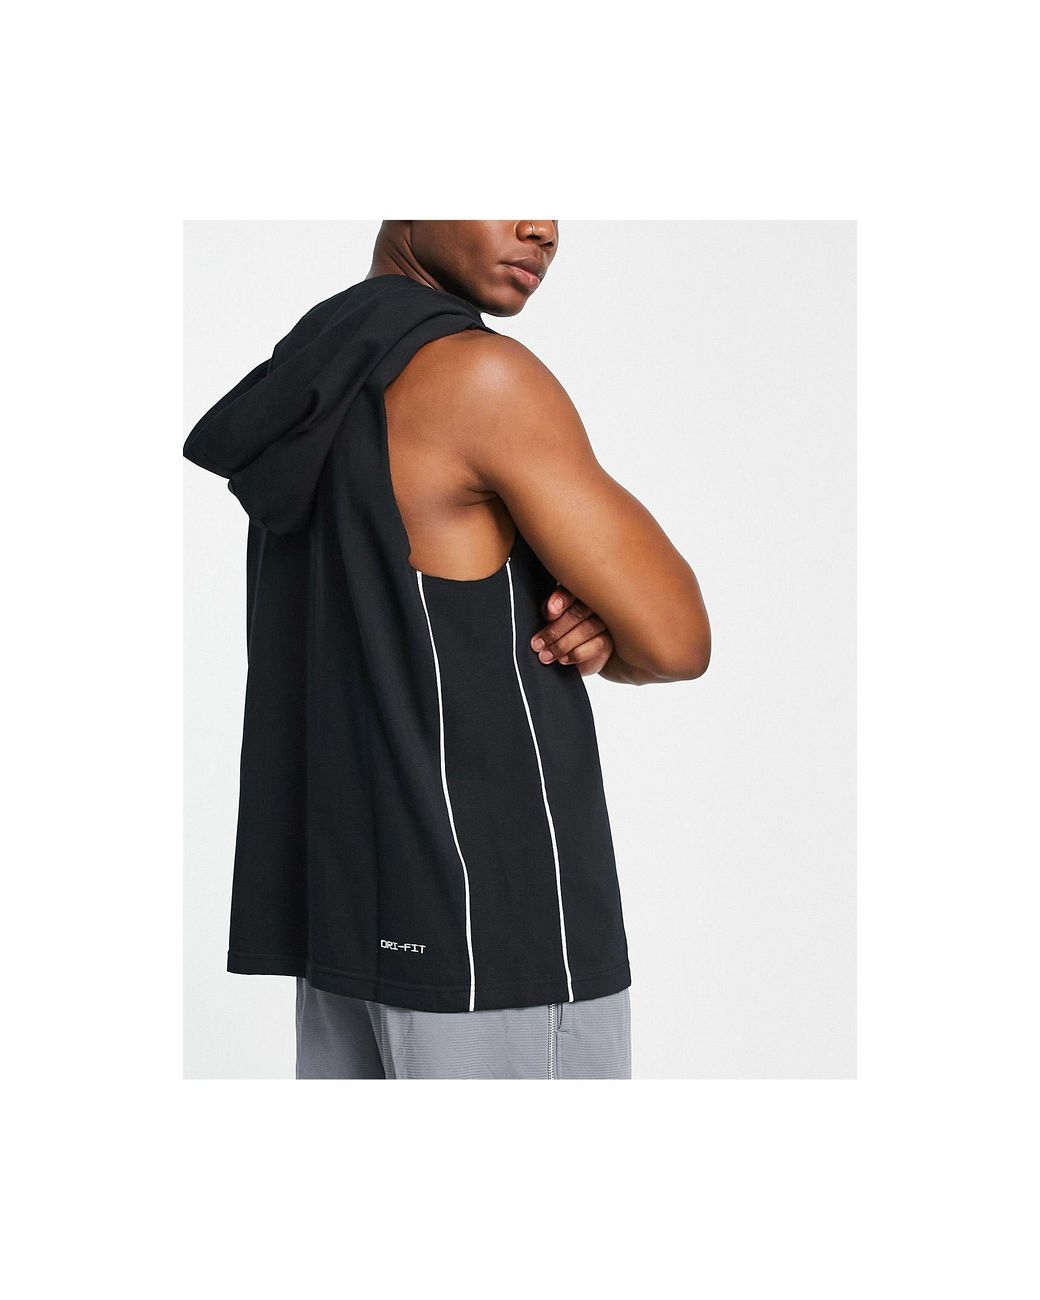 Nike Men's Dri-fit Sleeveless Hoodie